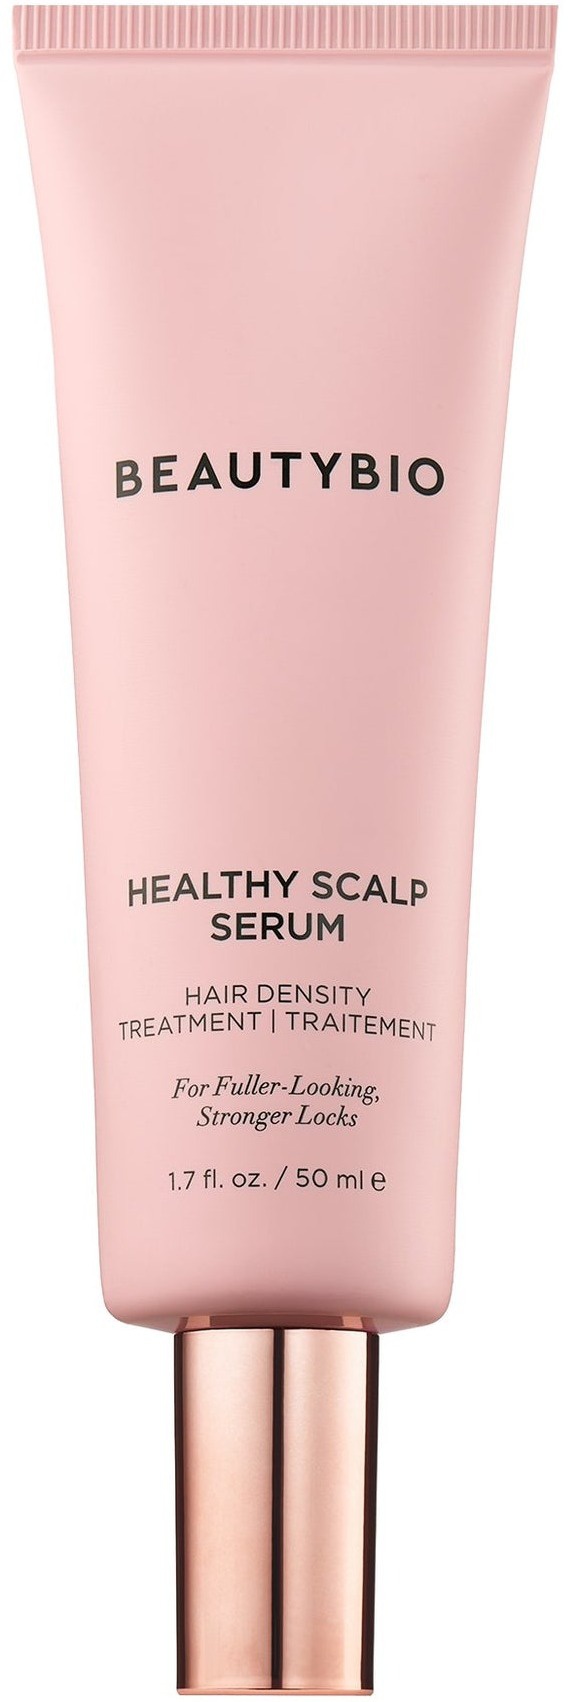 Beautybio Healthy Scalp Serum